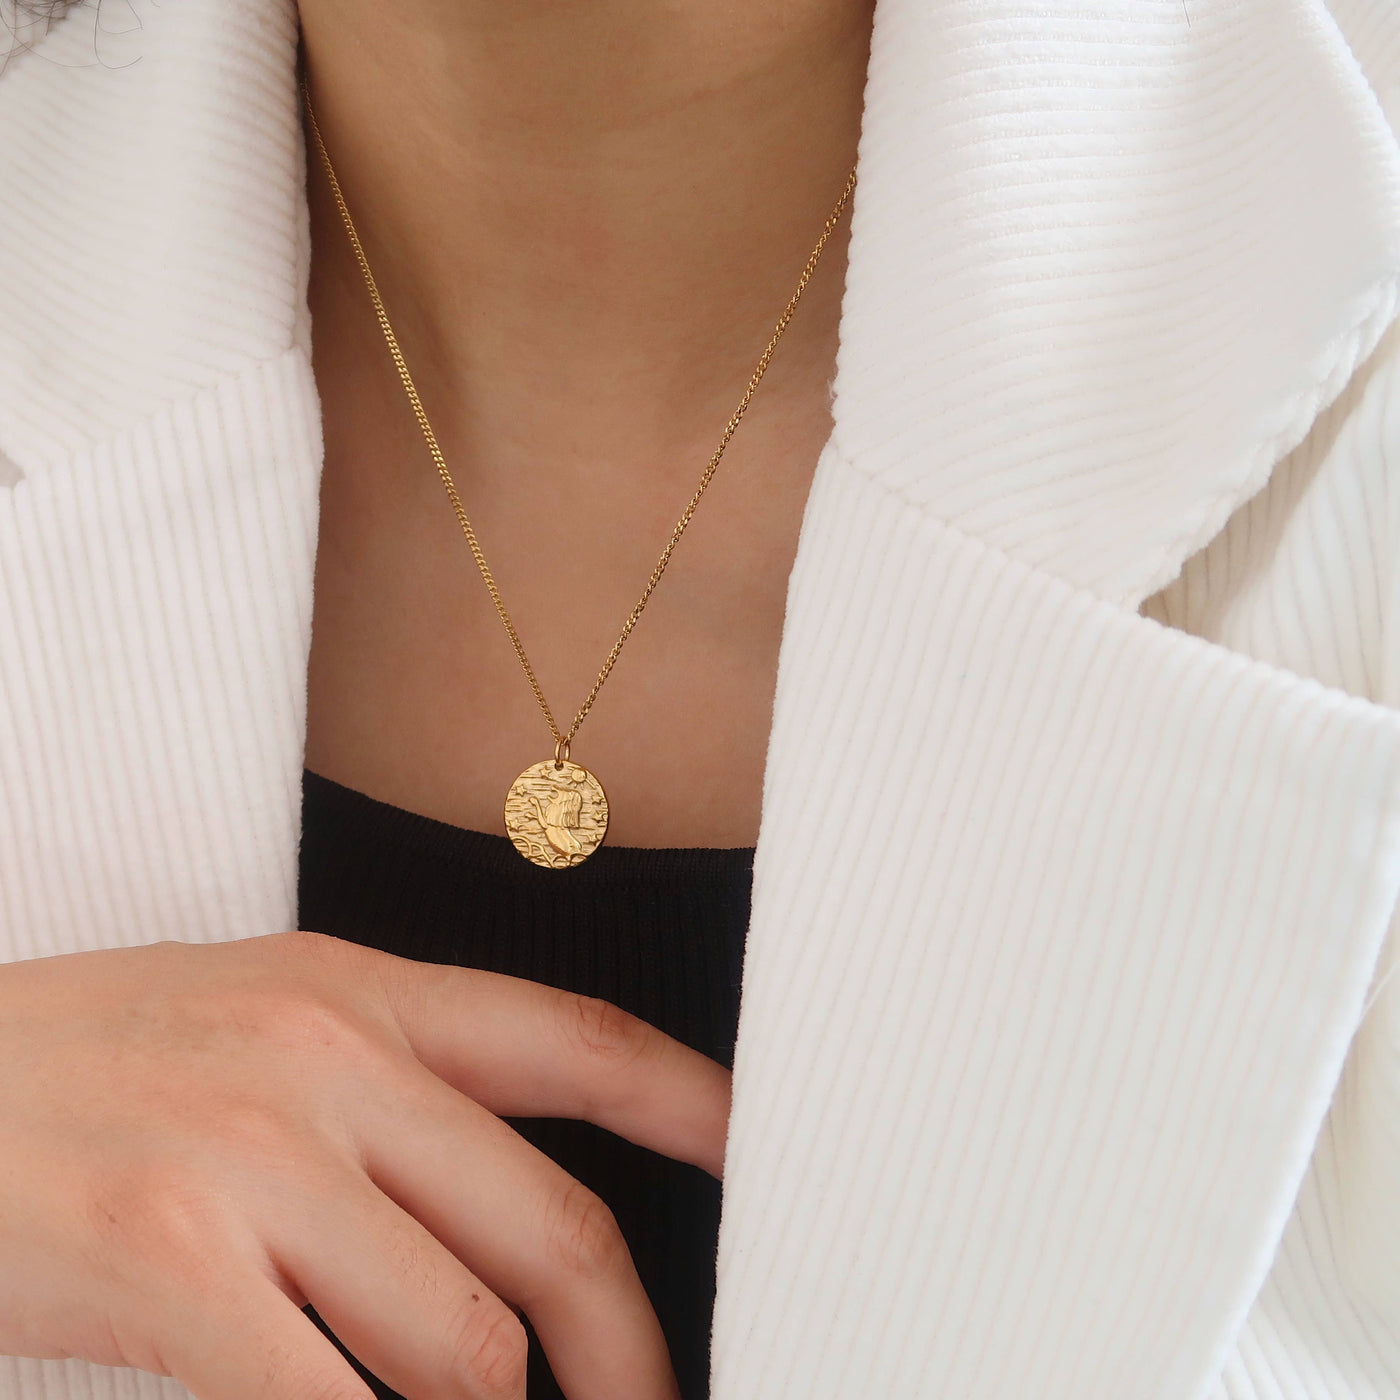 18k gold lion pendant necklace; vintage carved charm pendant